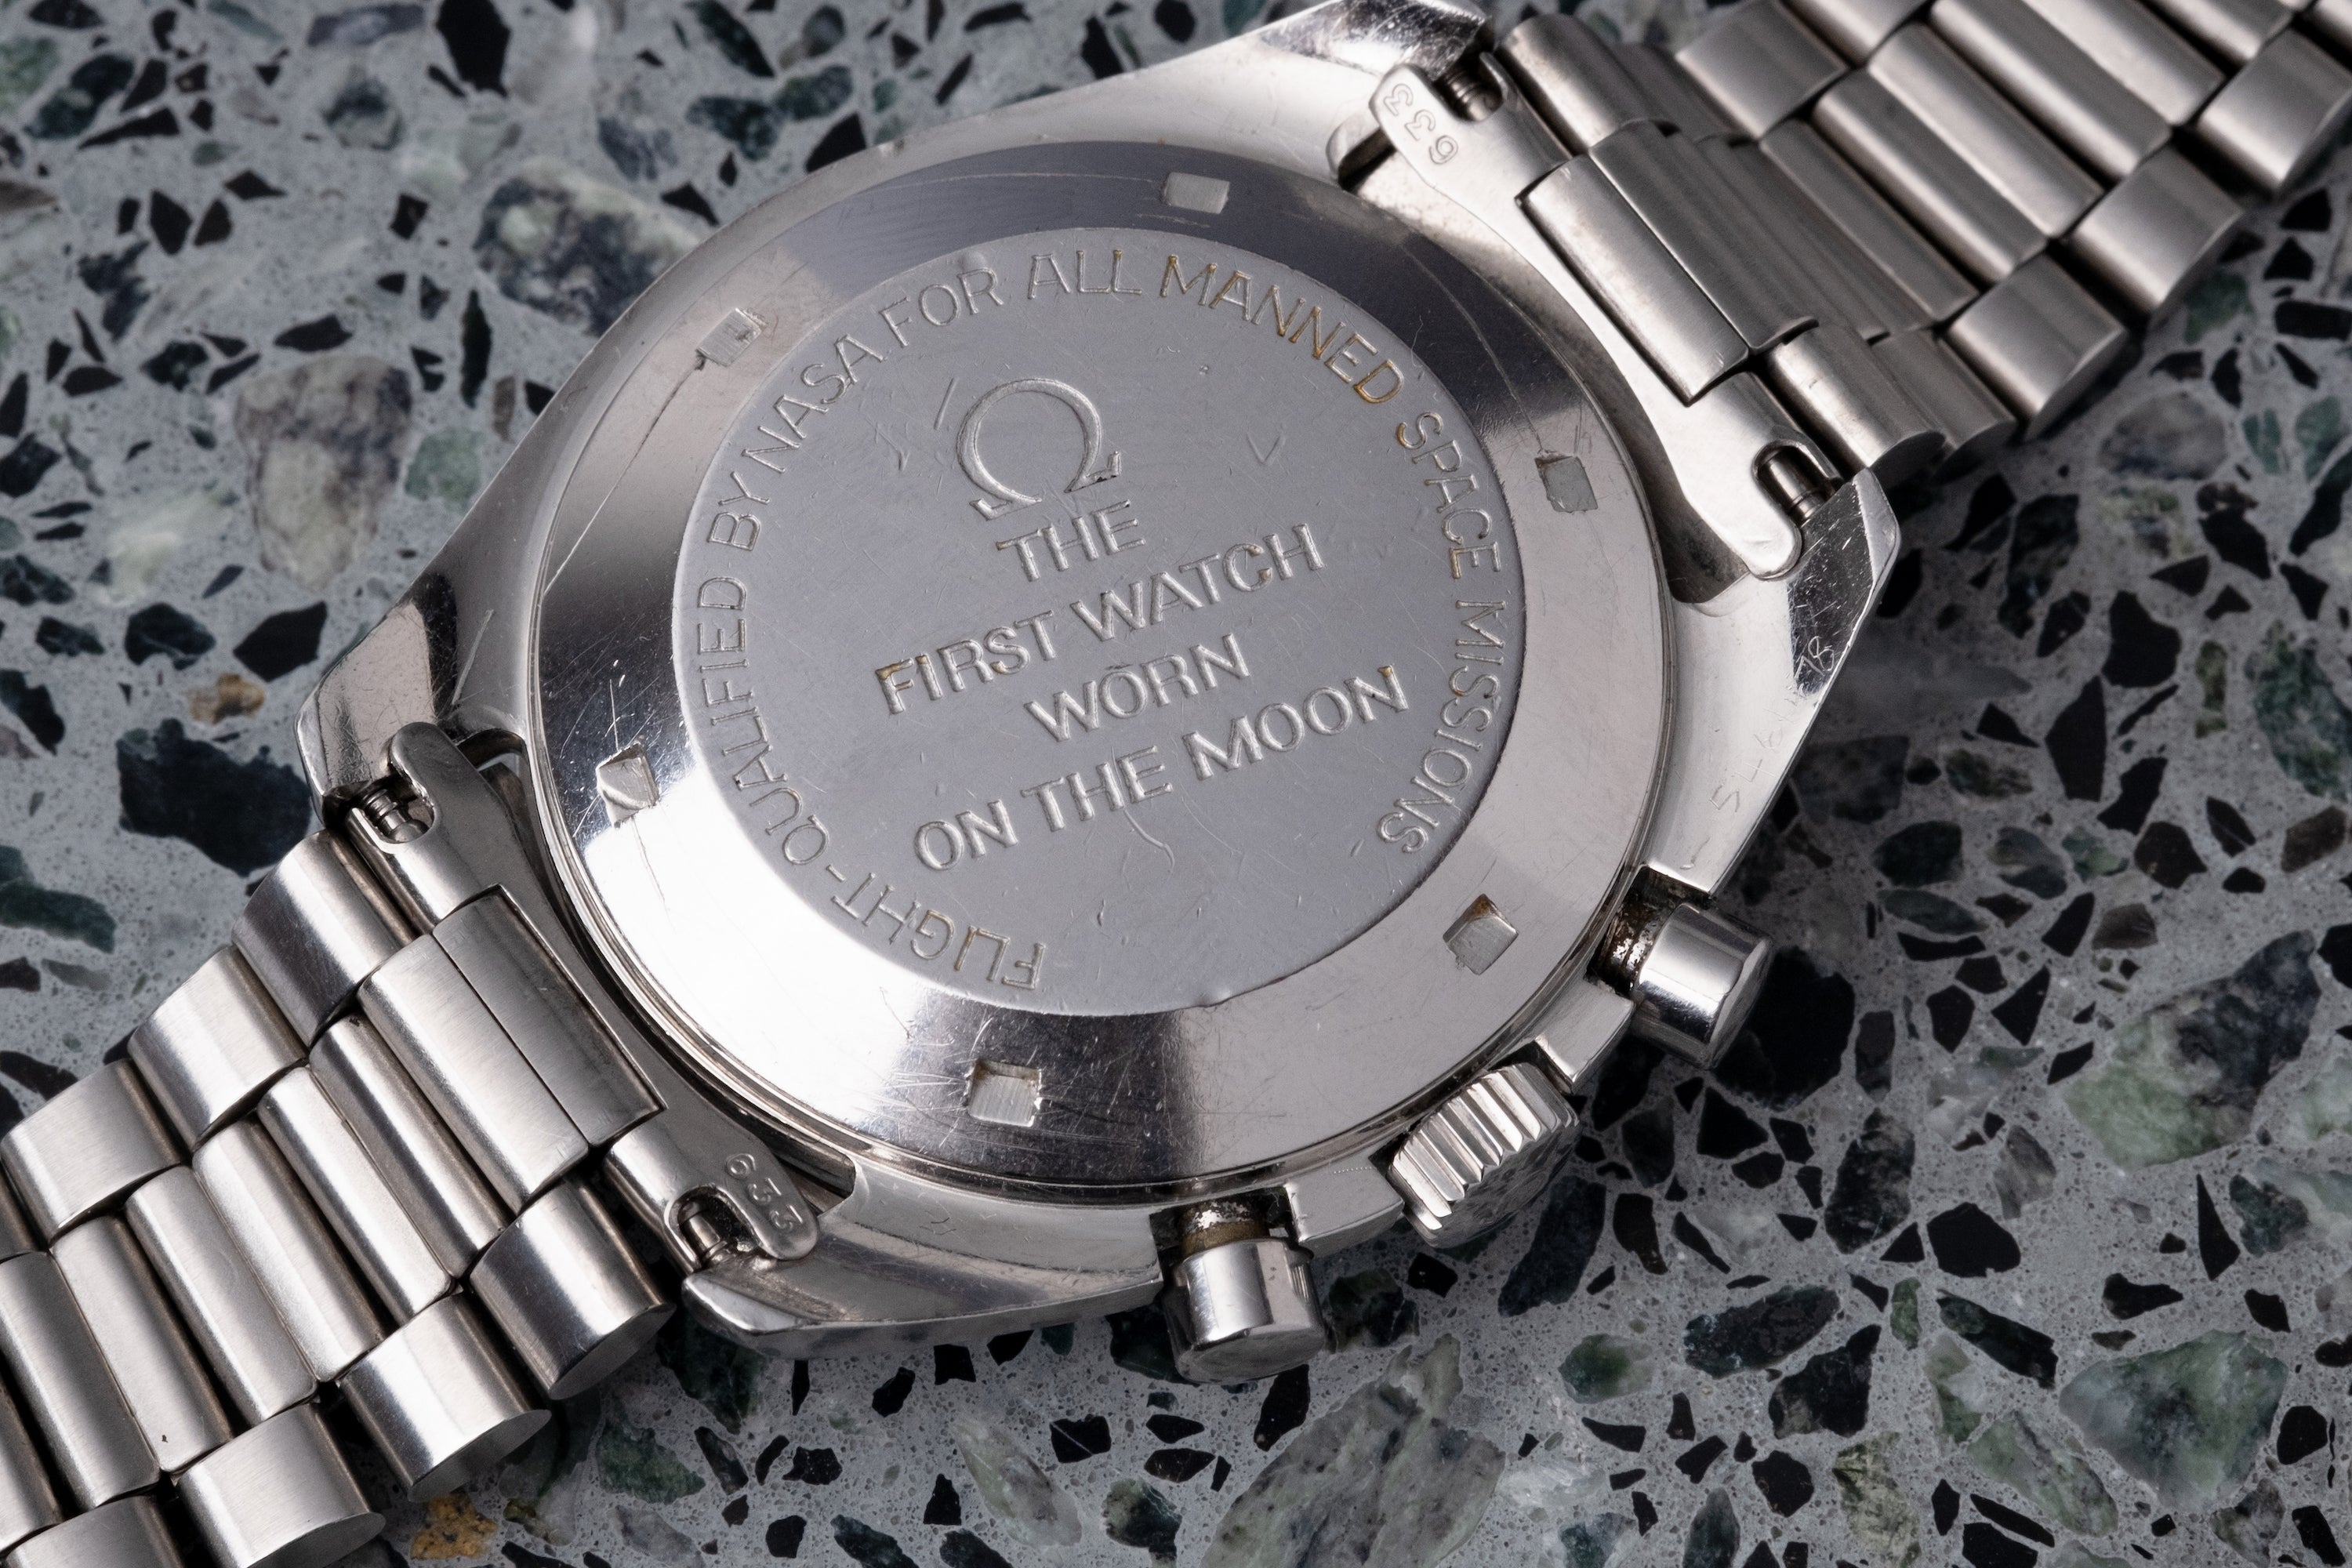 OMEGA Speedmaster Professional Moonwatch Straight Writing Ref. 145.022 69 ST (1971)